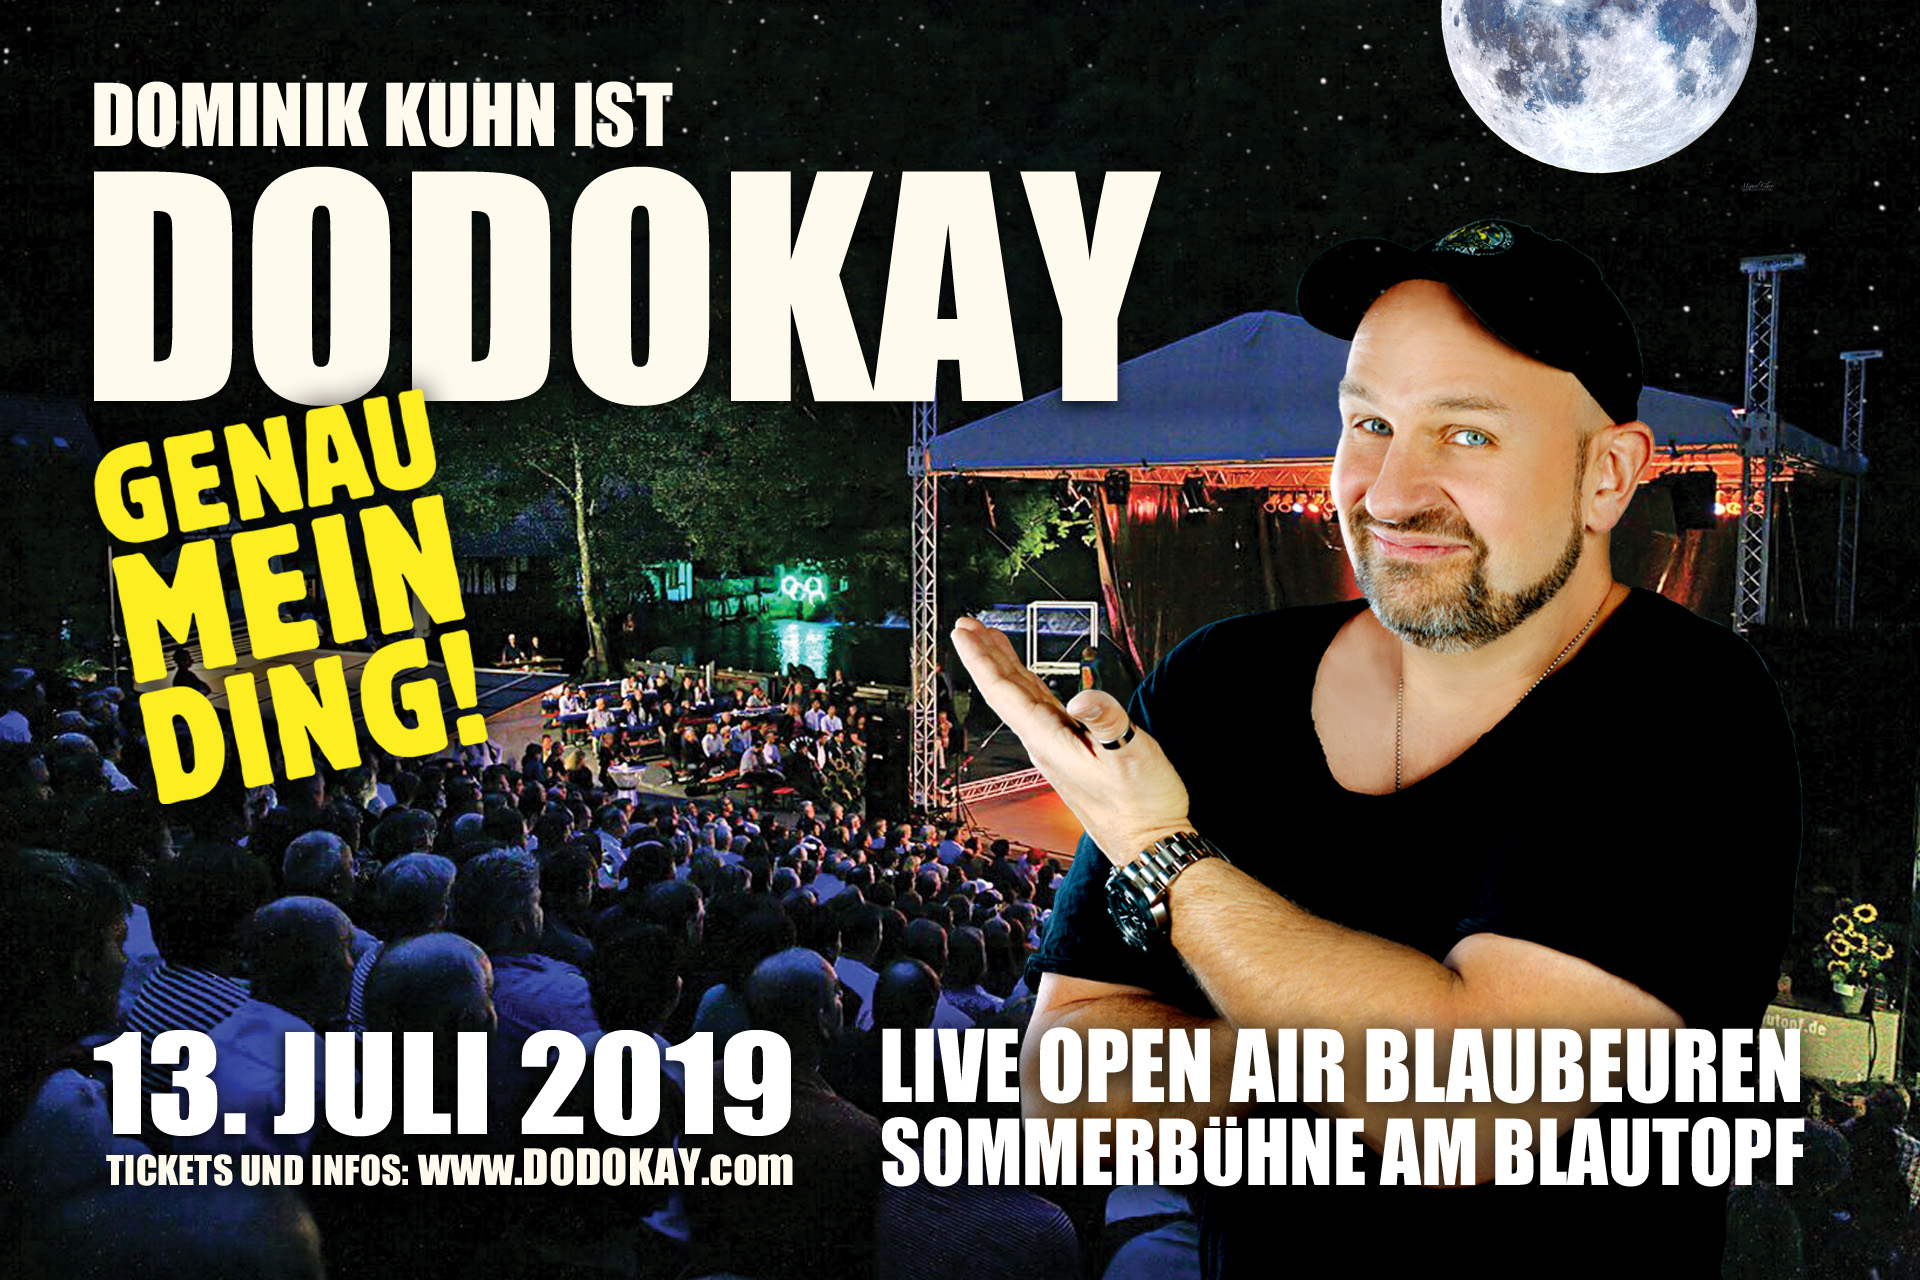 Dodokay live Blaubeuren Sommerbühne am Blautopf